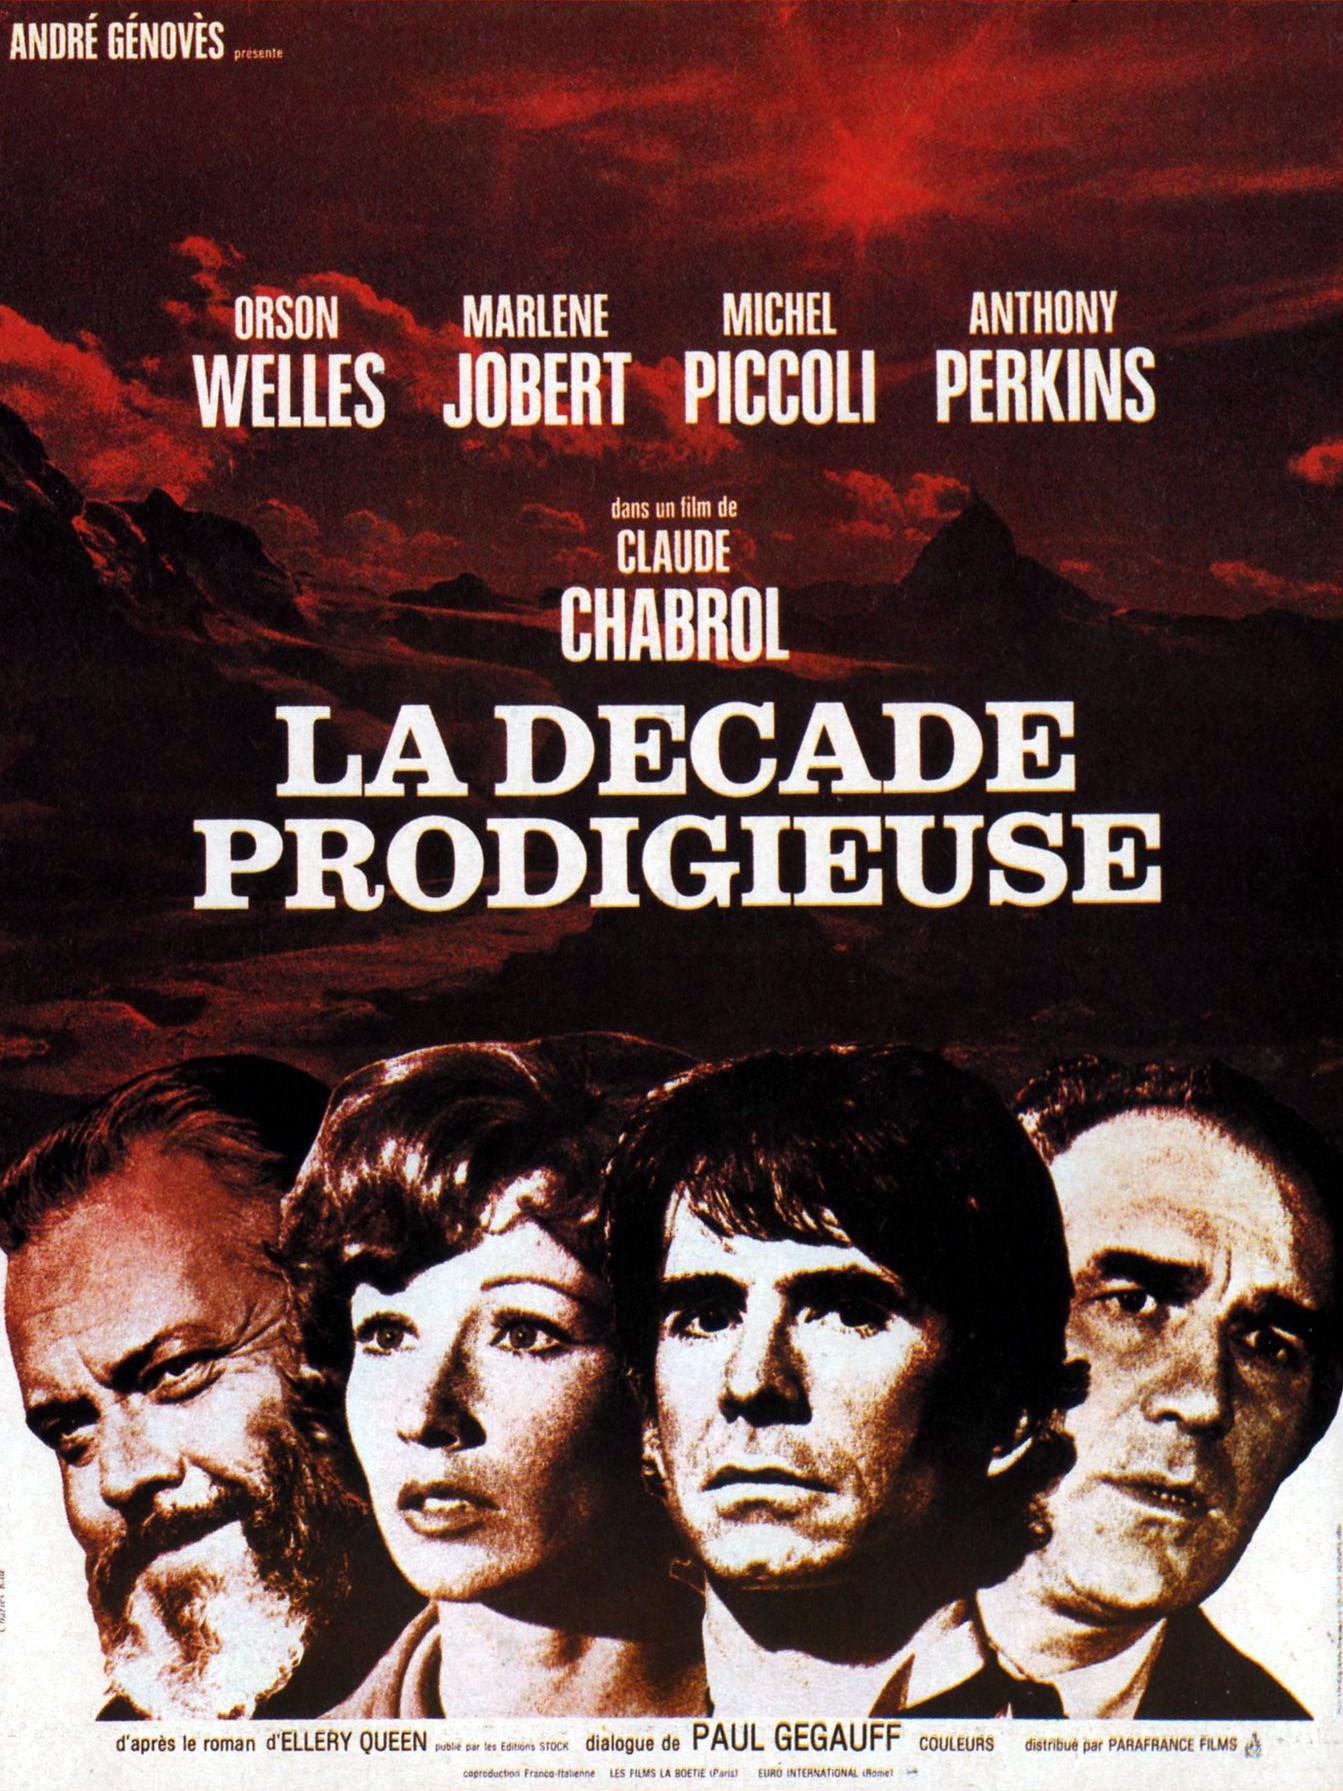 La Decade Prodigieuse [1971]